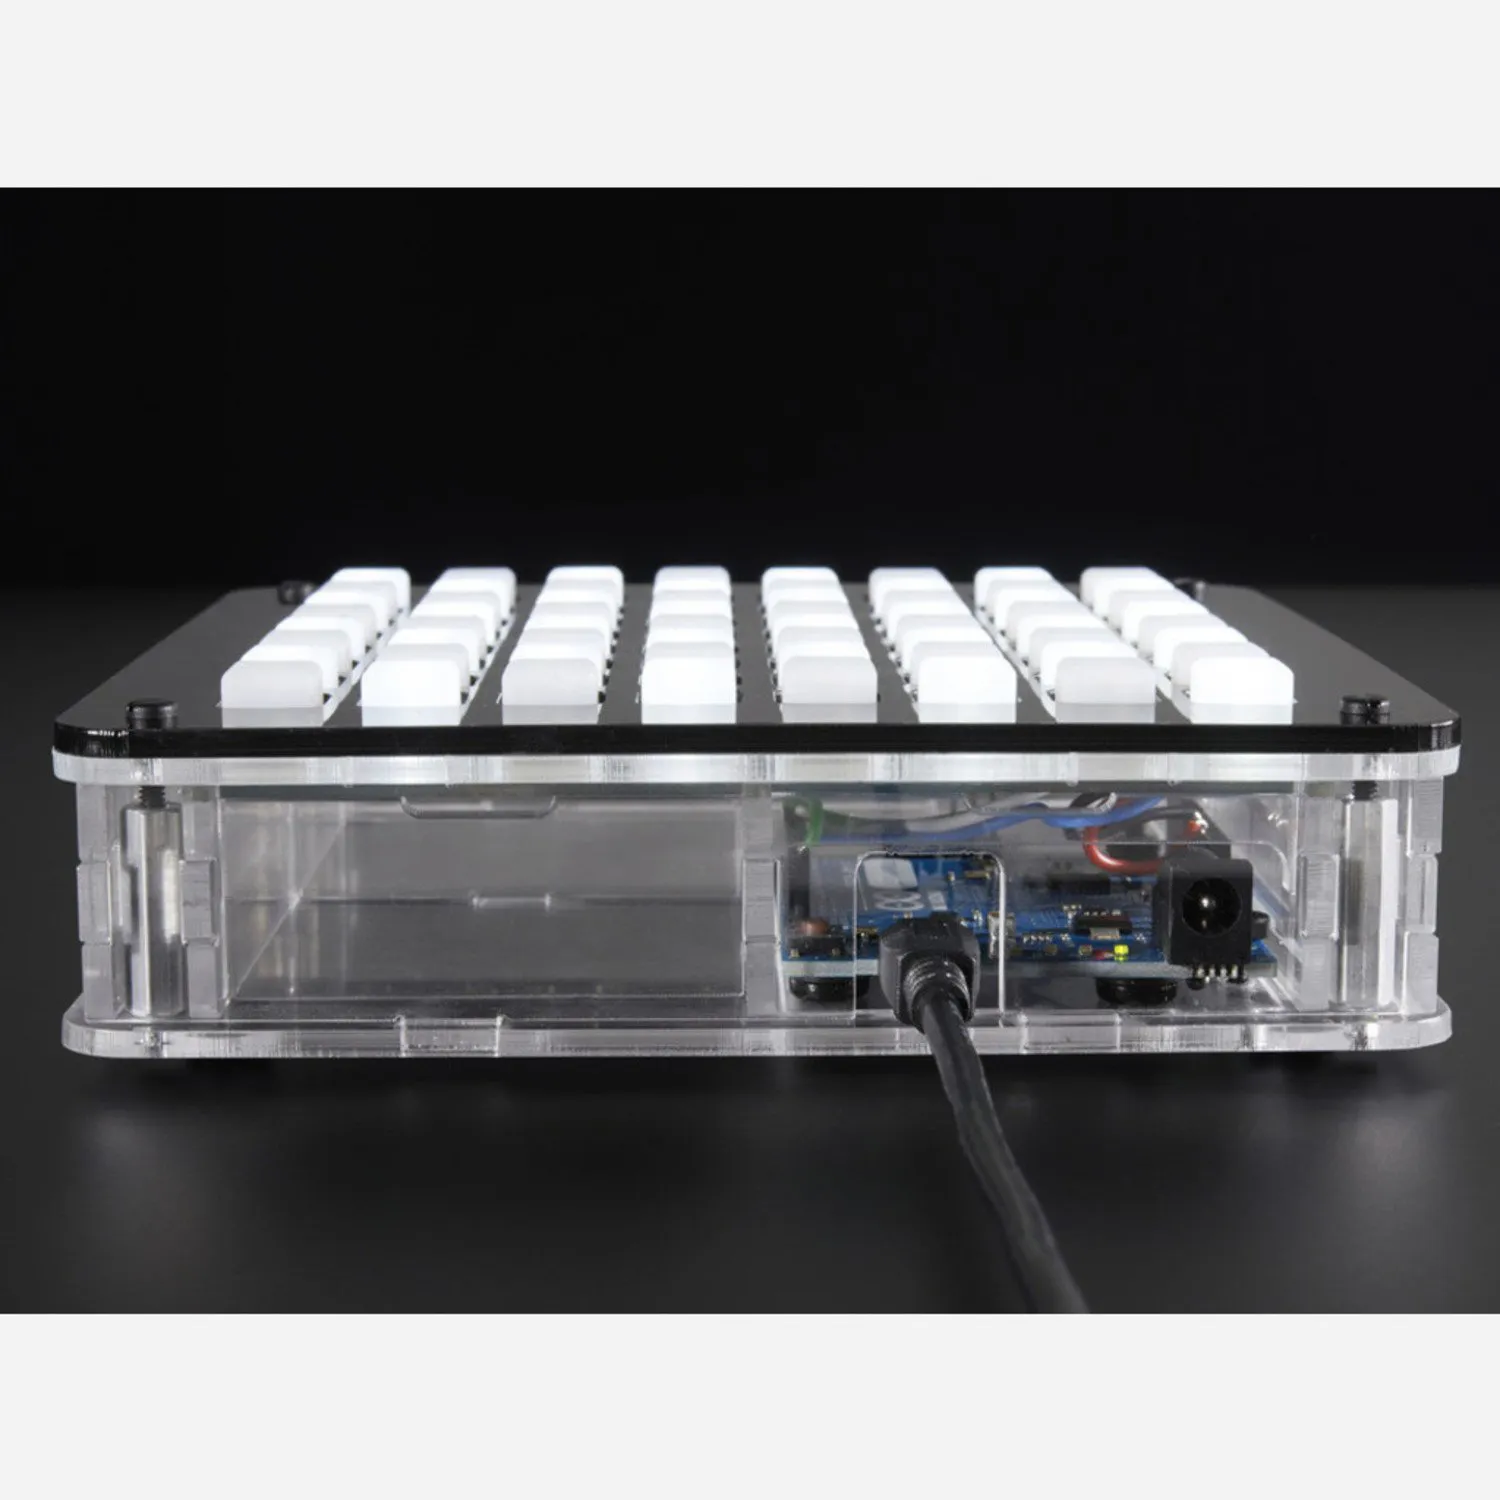 Photo of Adafruit UNTZtrument! Open-Source 8x8 Grid Controller Kit [8x8 White LEDs]